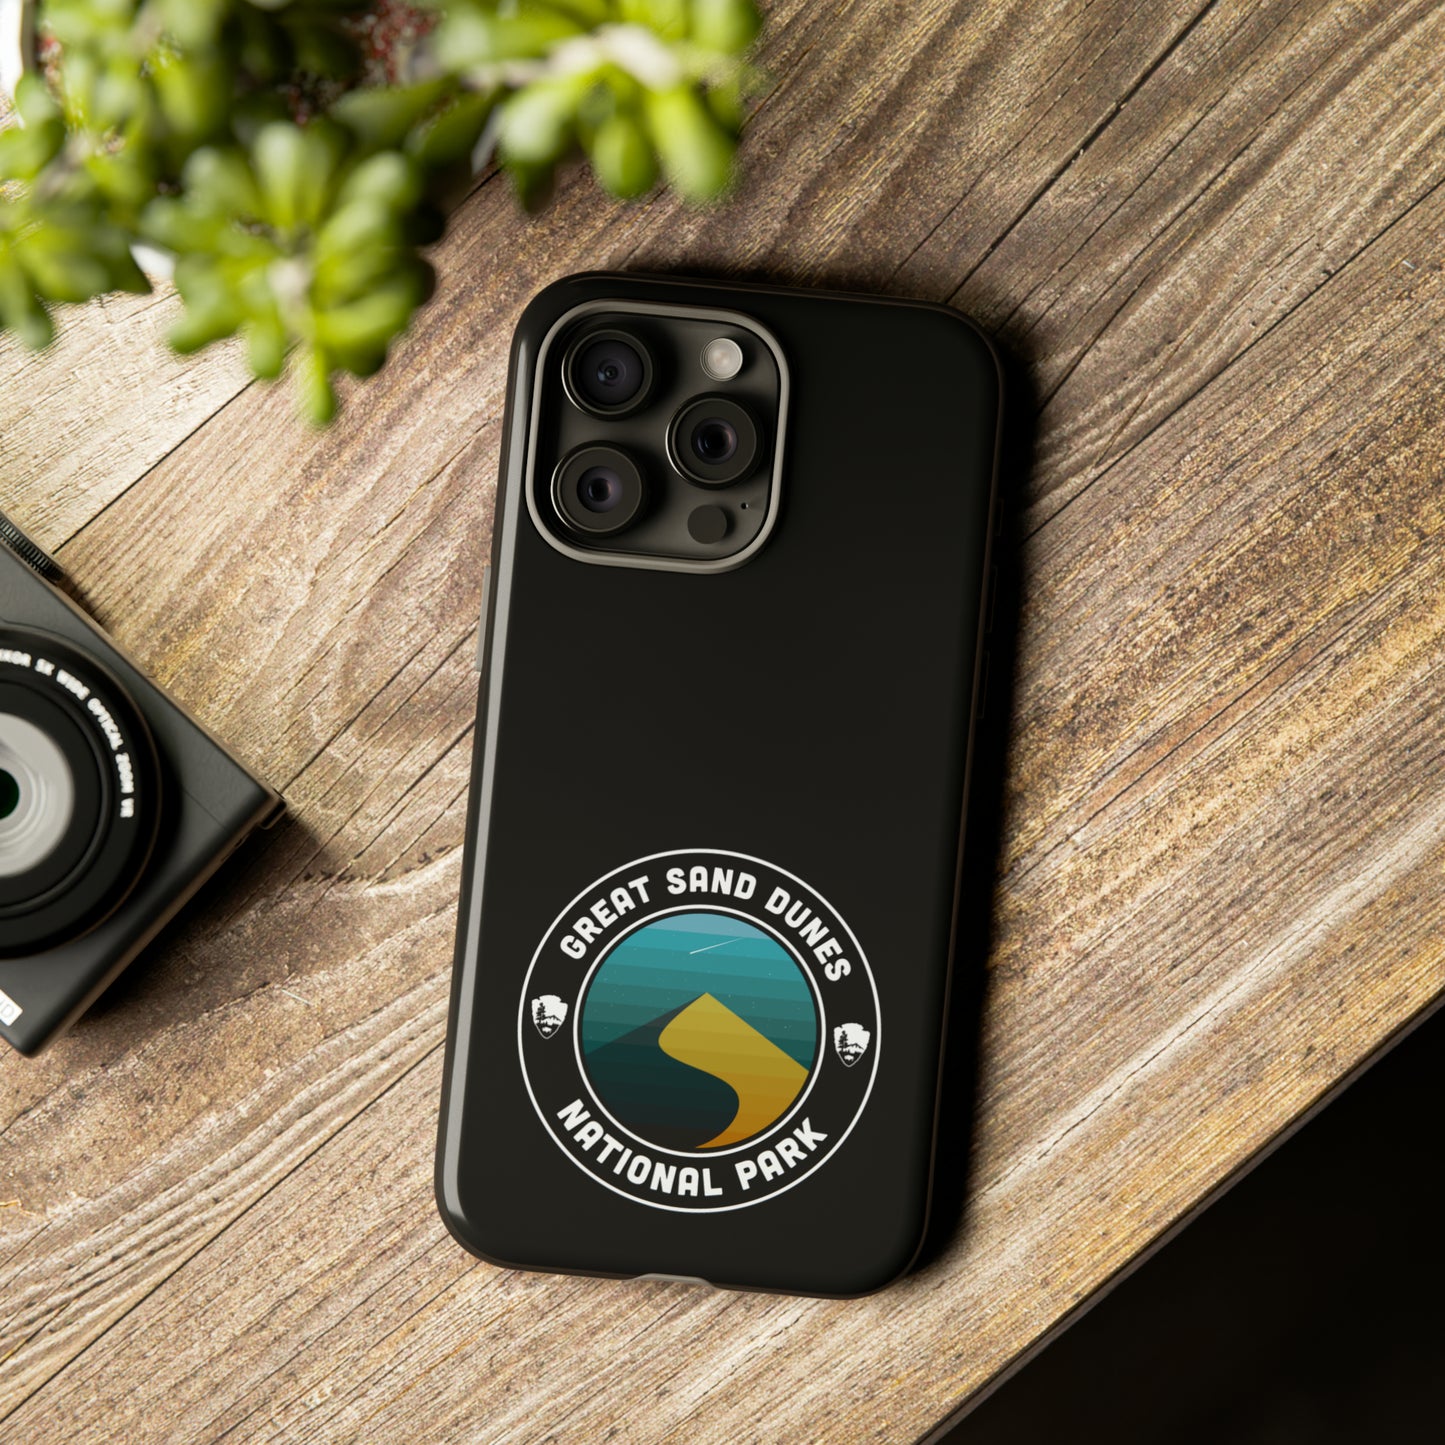 Great Sand Dunes National Park Phone Case - Round Emblem Design